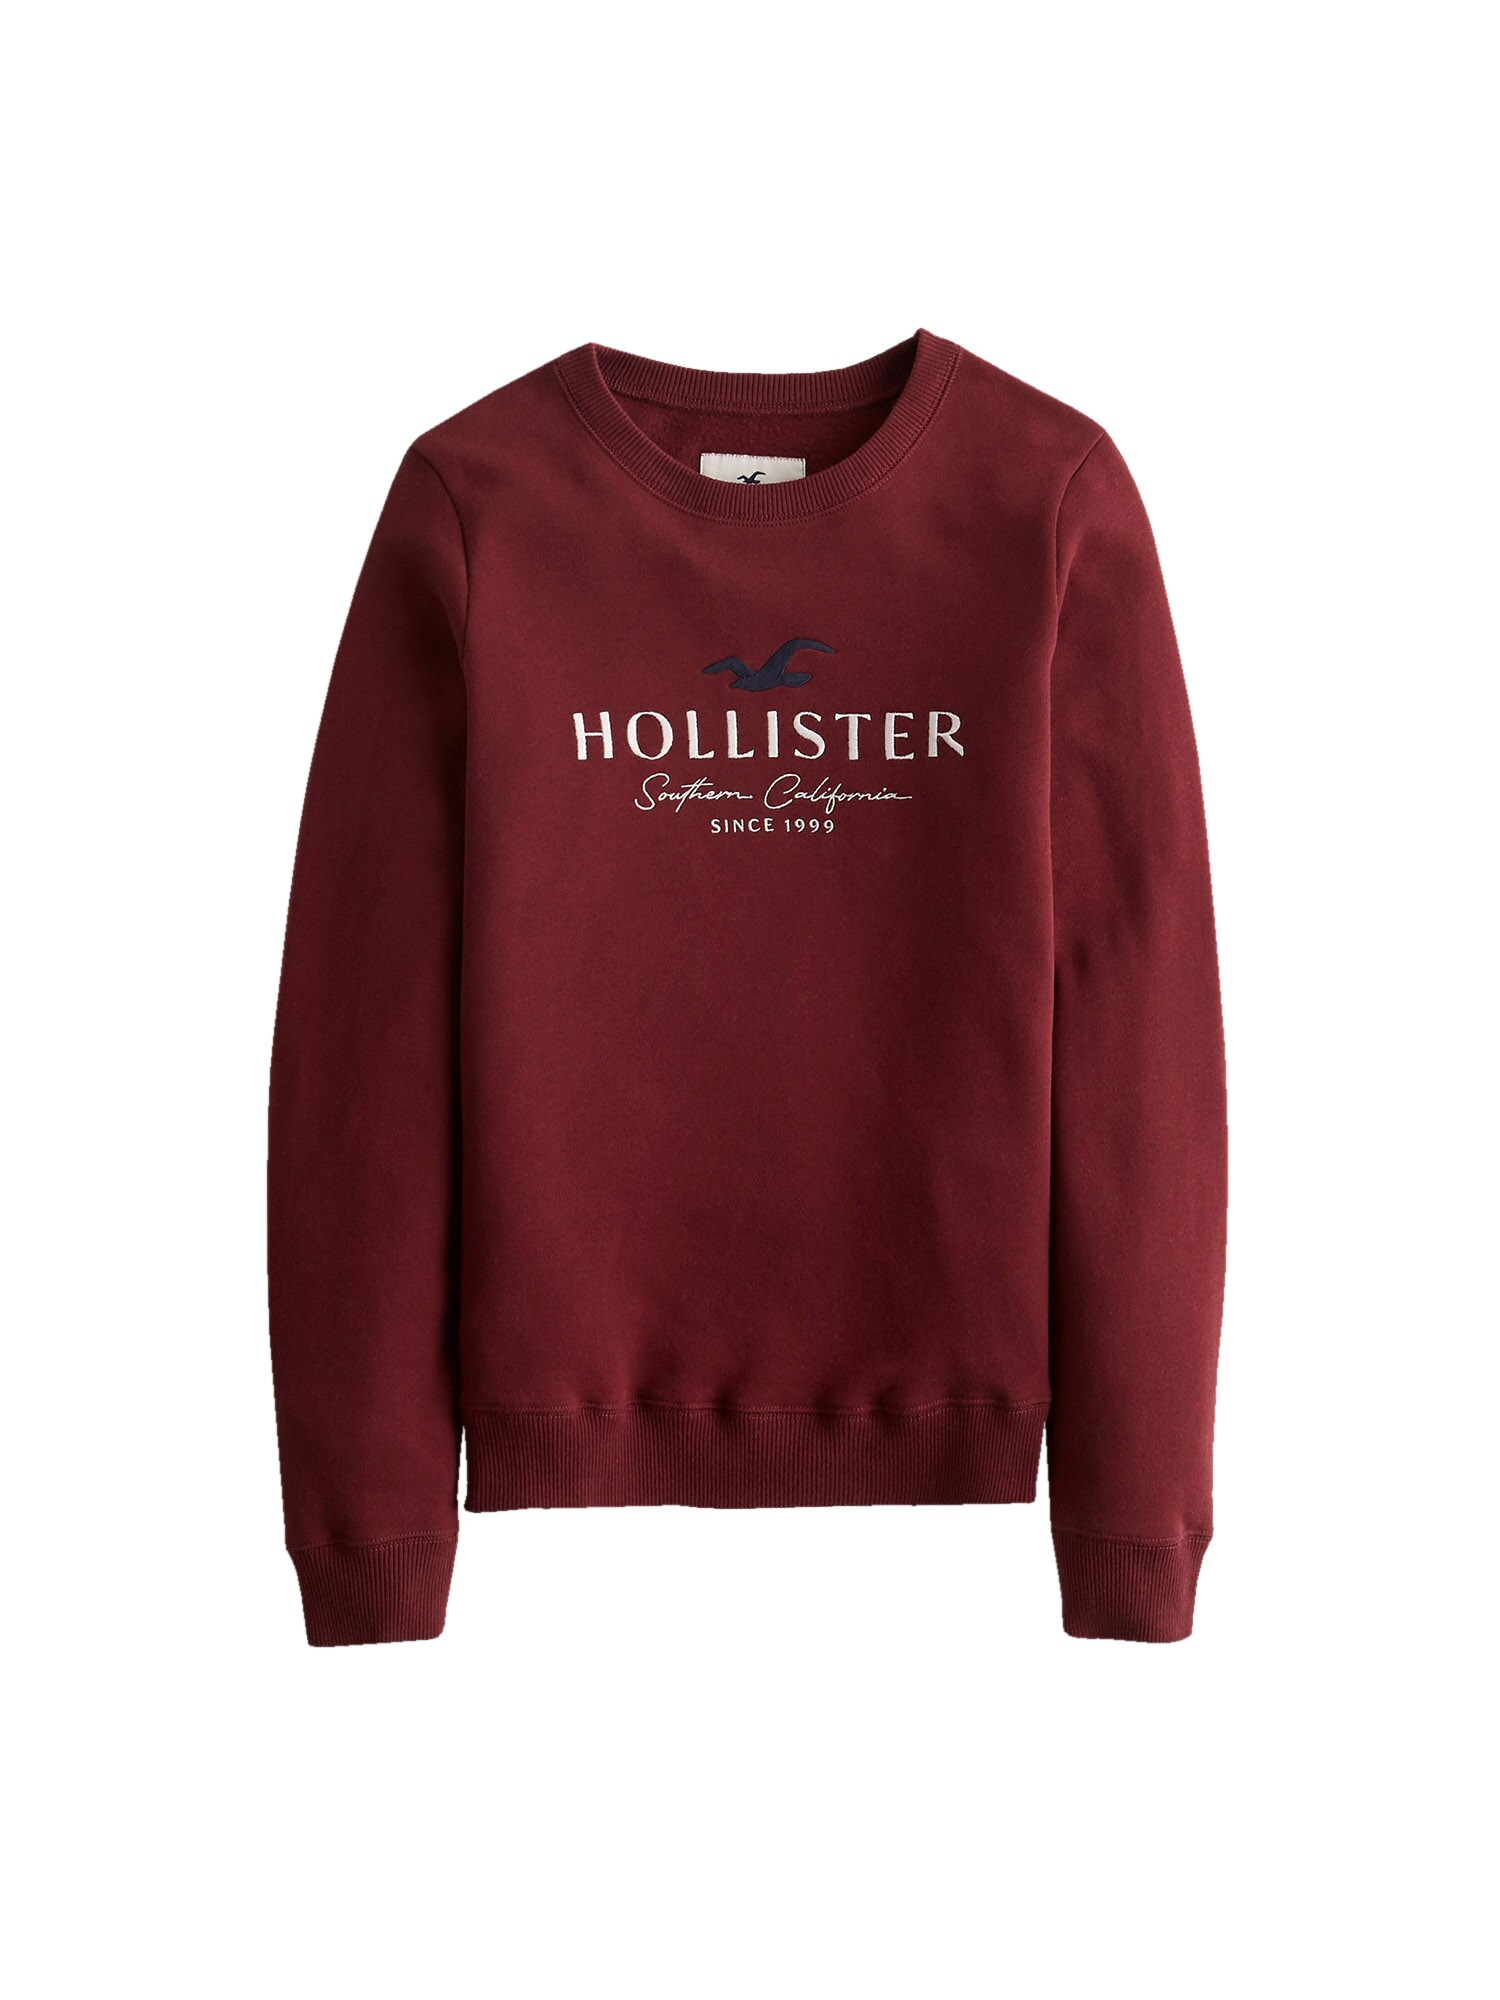 HOLLISTER Sweatshirt  vermelho sangue / branco / azul noite